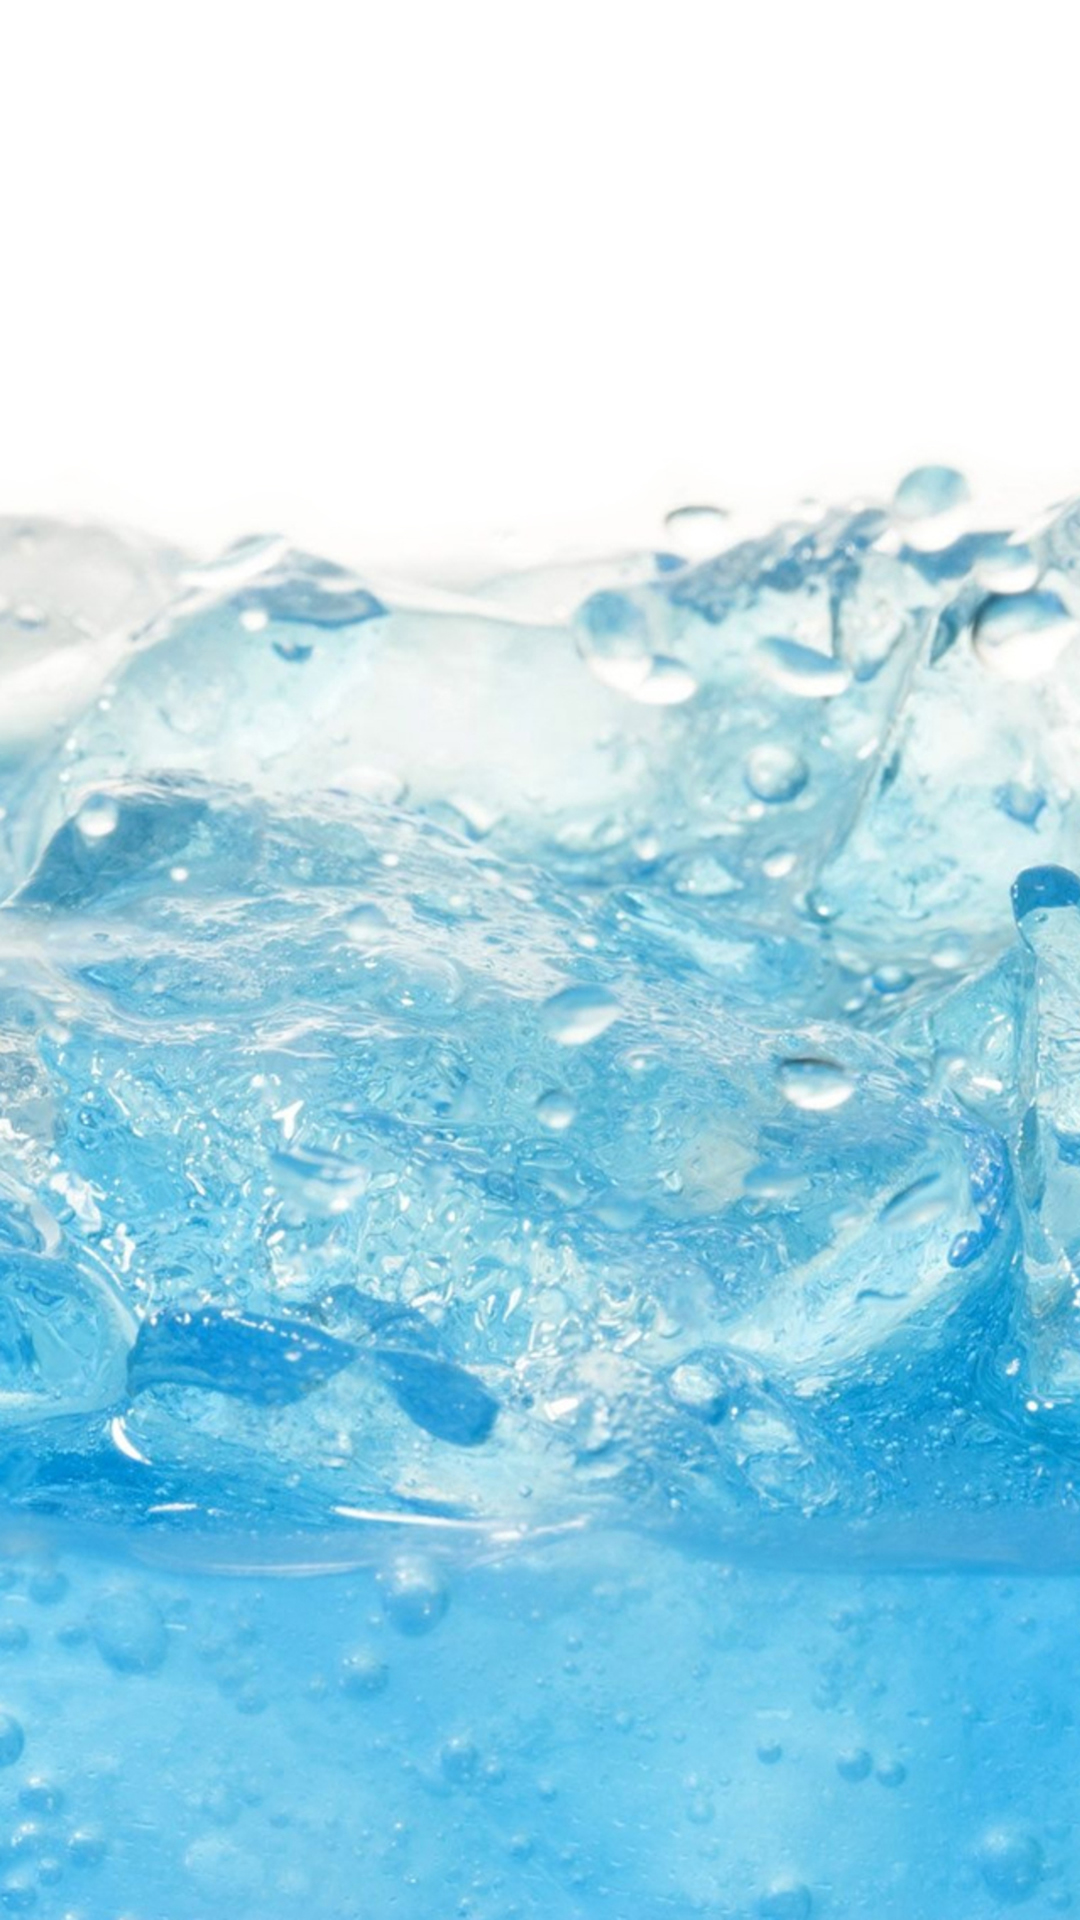 Crystal Bubble Water Splash Background iPhone Wallpaper